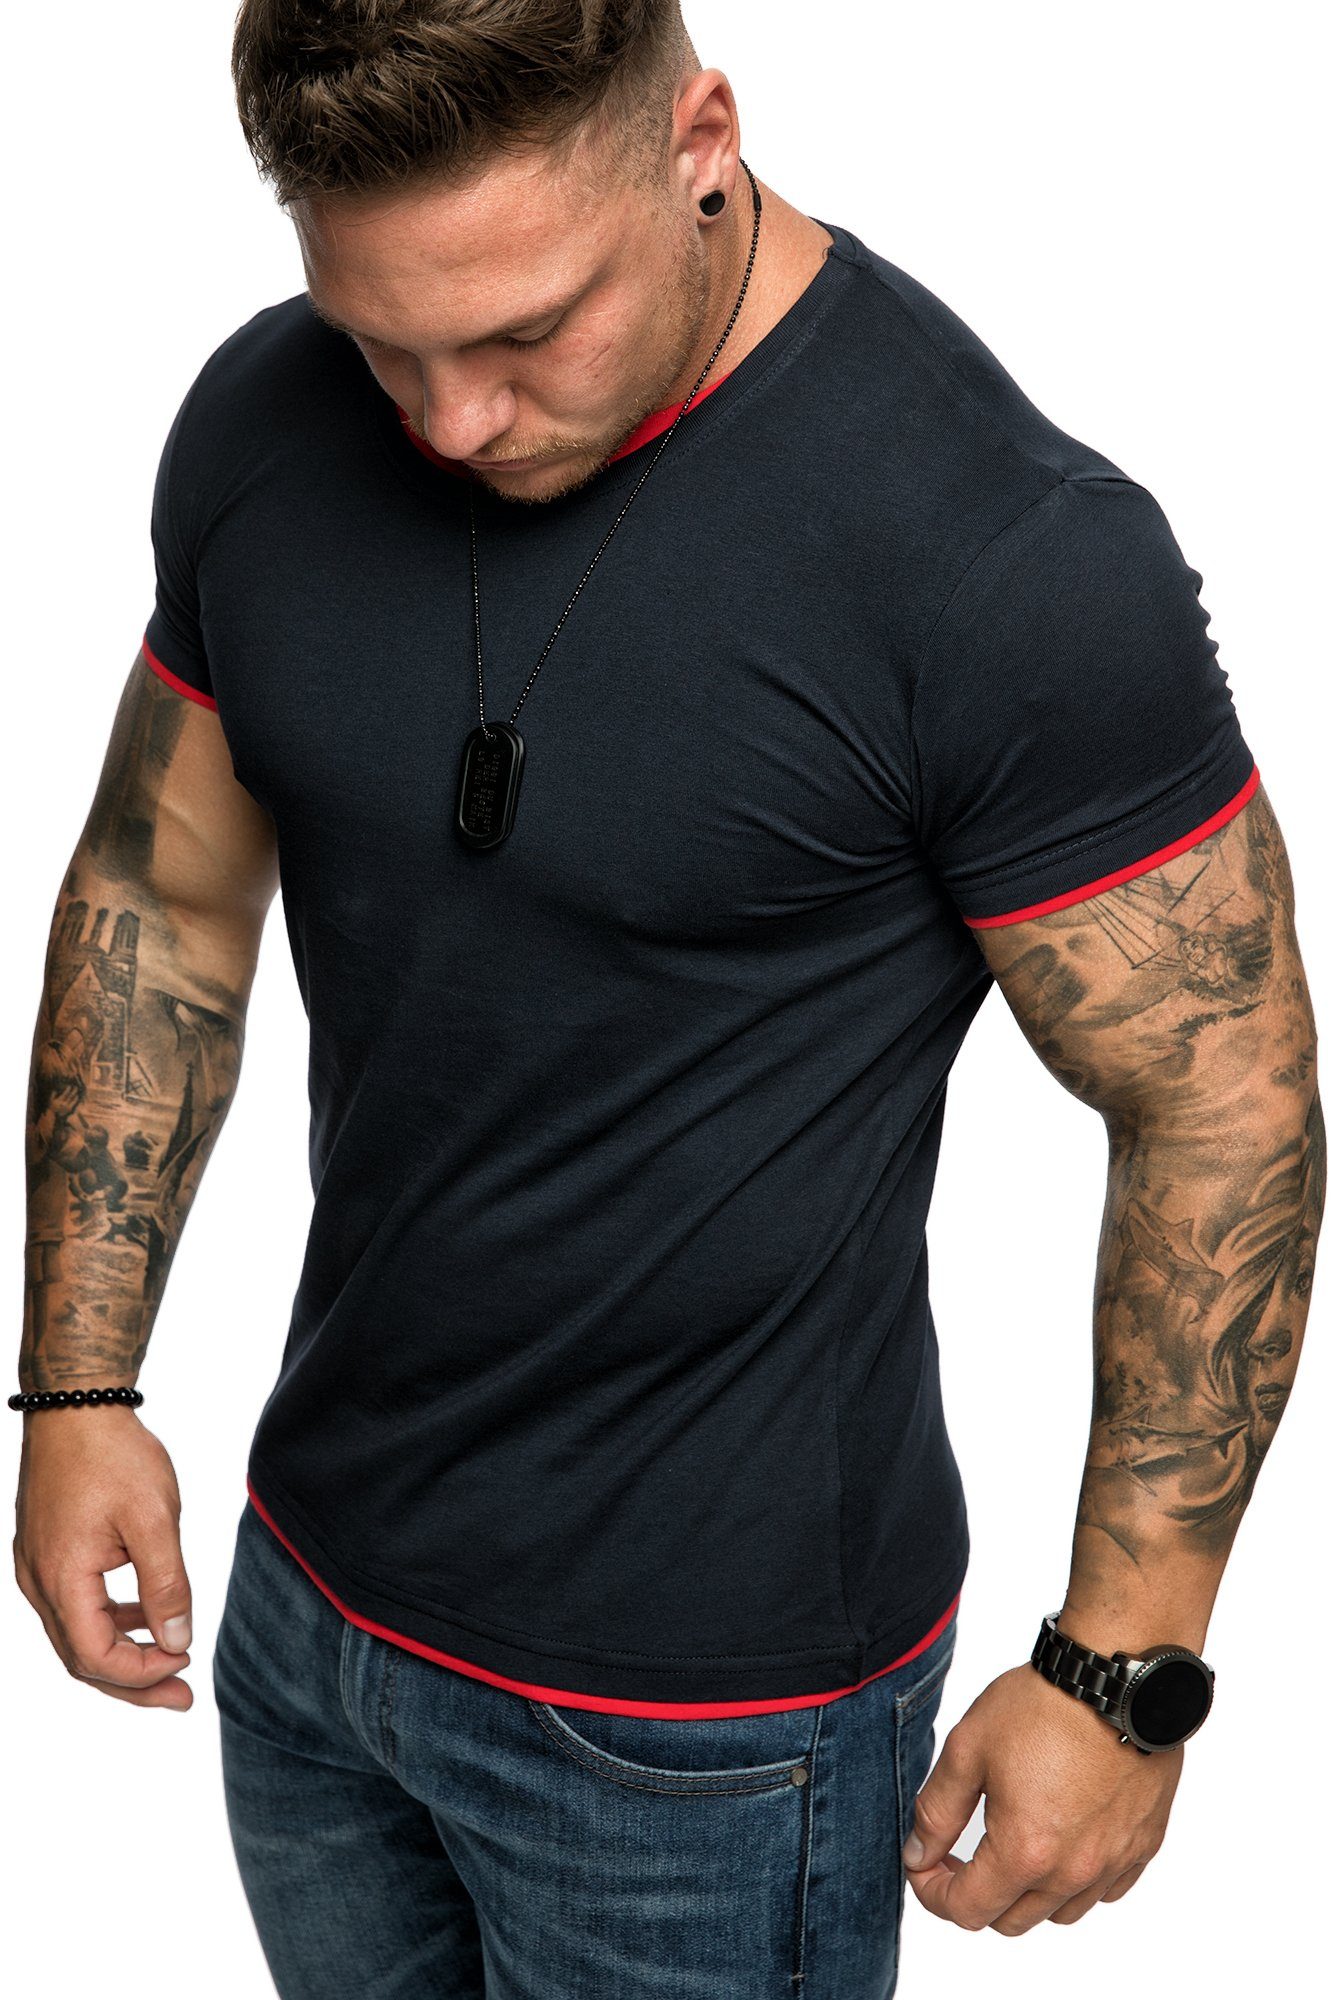 Amaci&Sons T-Shirt LAKEWOOD Herren Slim-Fit Basic Shirt Doppel Farbig mit Rundhalsausschnitt Navyblau/Rot